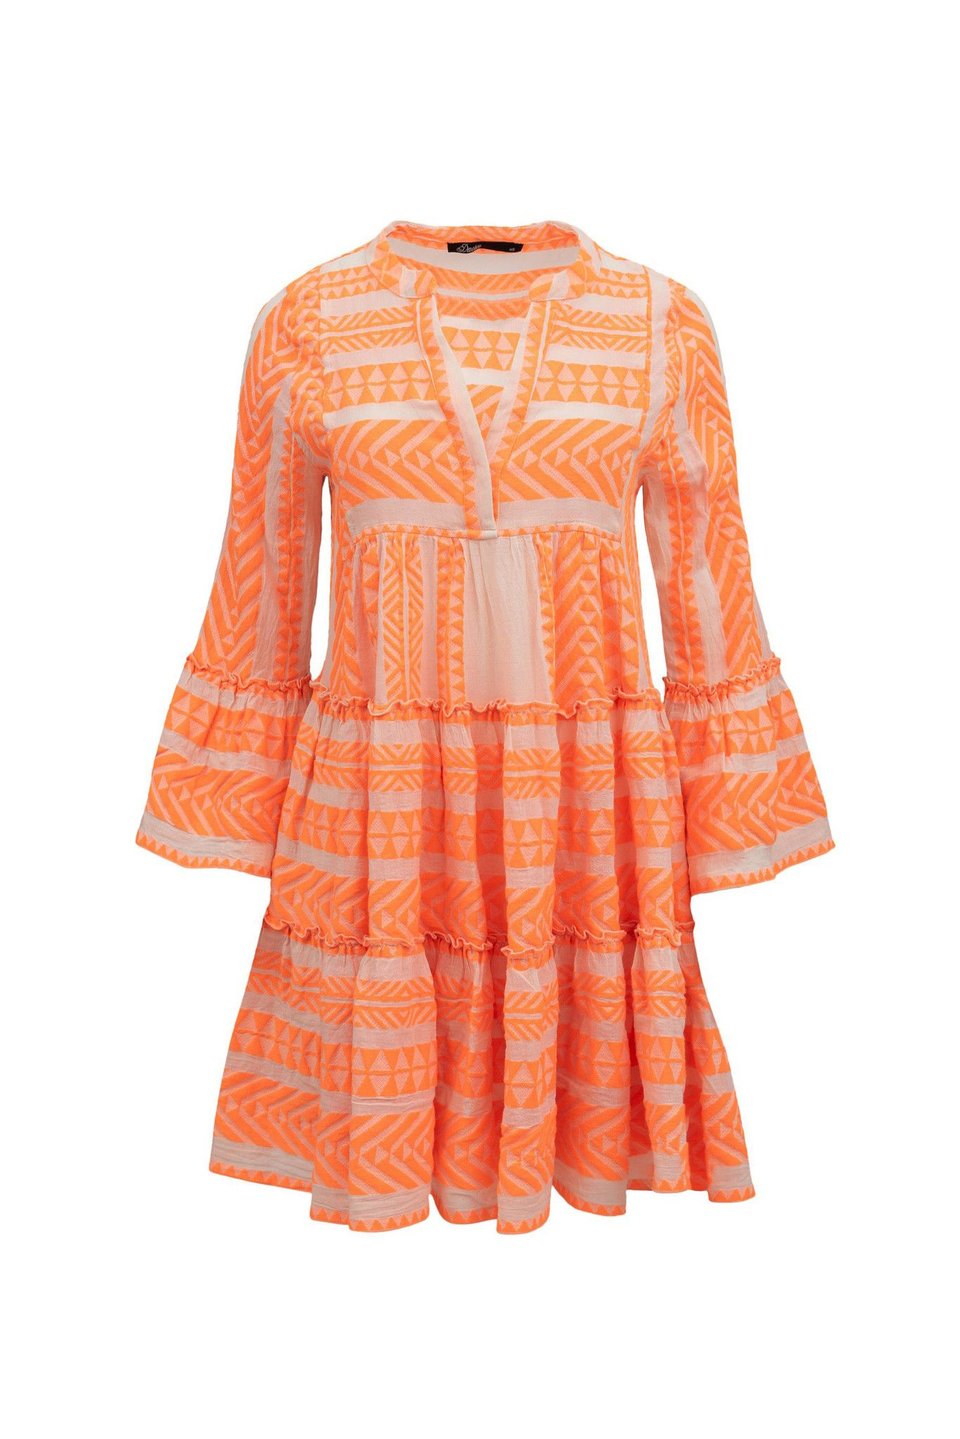 Devotion Short Dress Neon Ella - Off White / Neon Orange